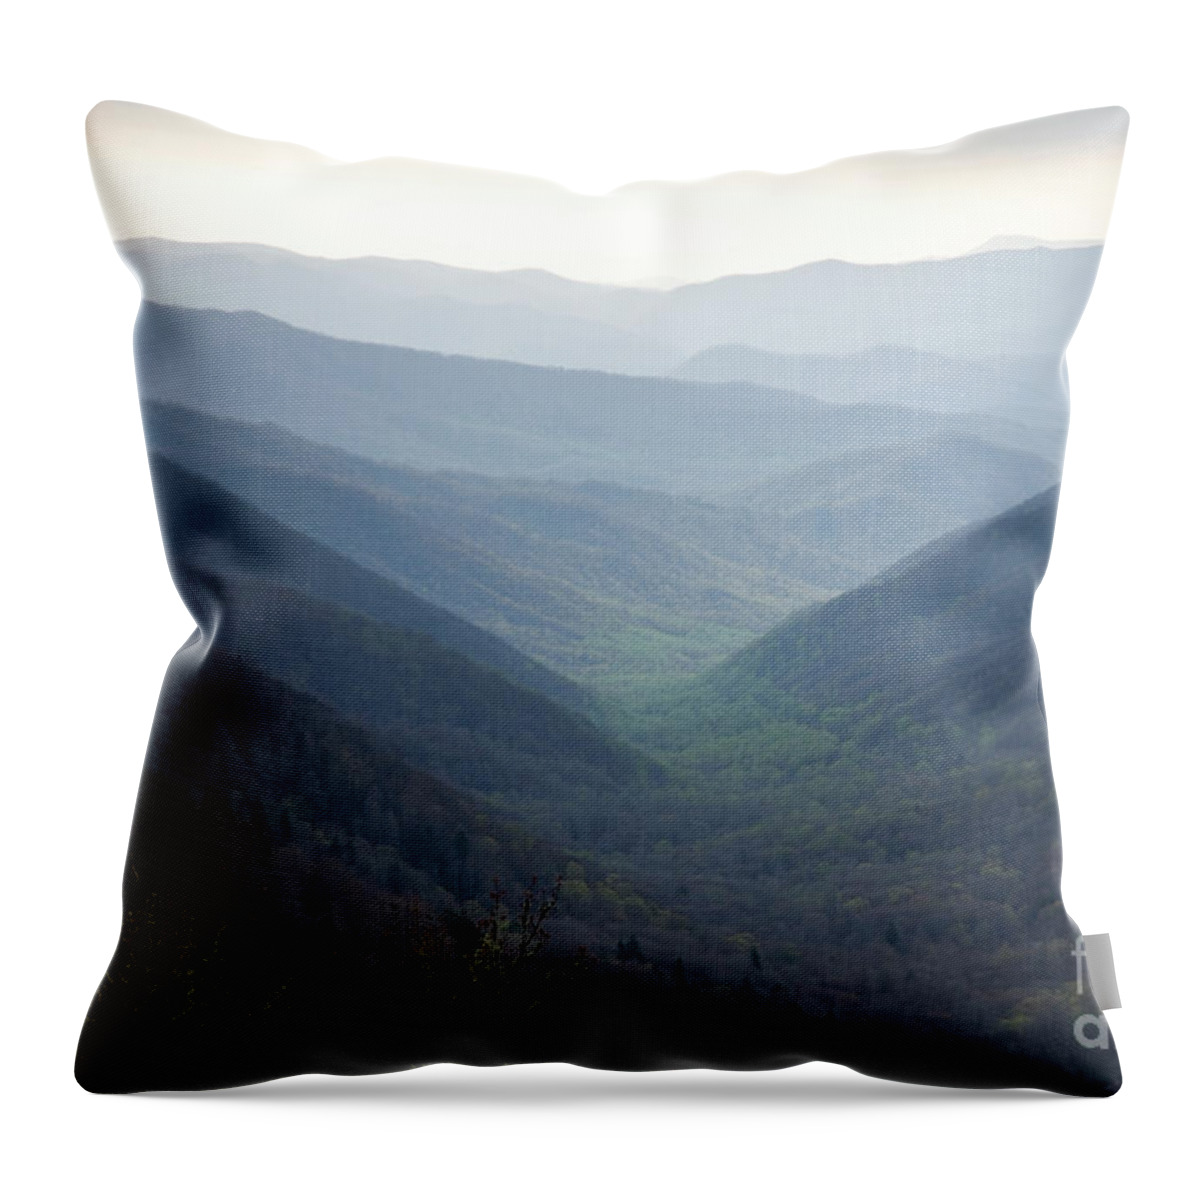 Smoky Throw Pillow featuring the photograph Smoky Mountain Fog by Timothy Johnson